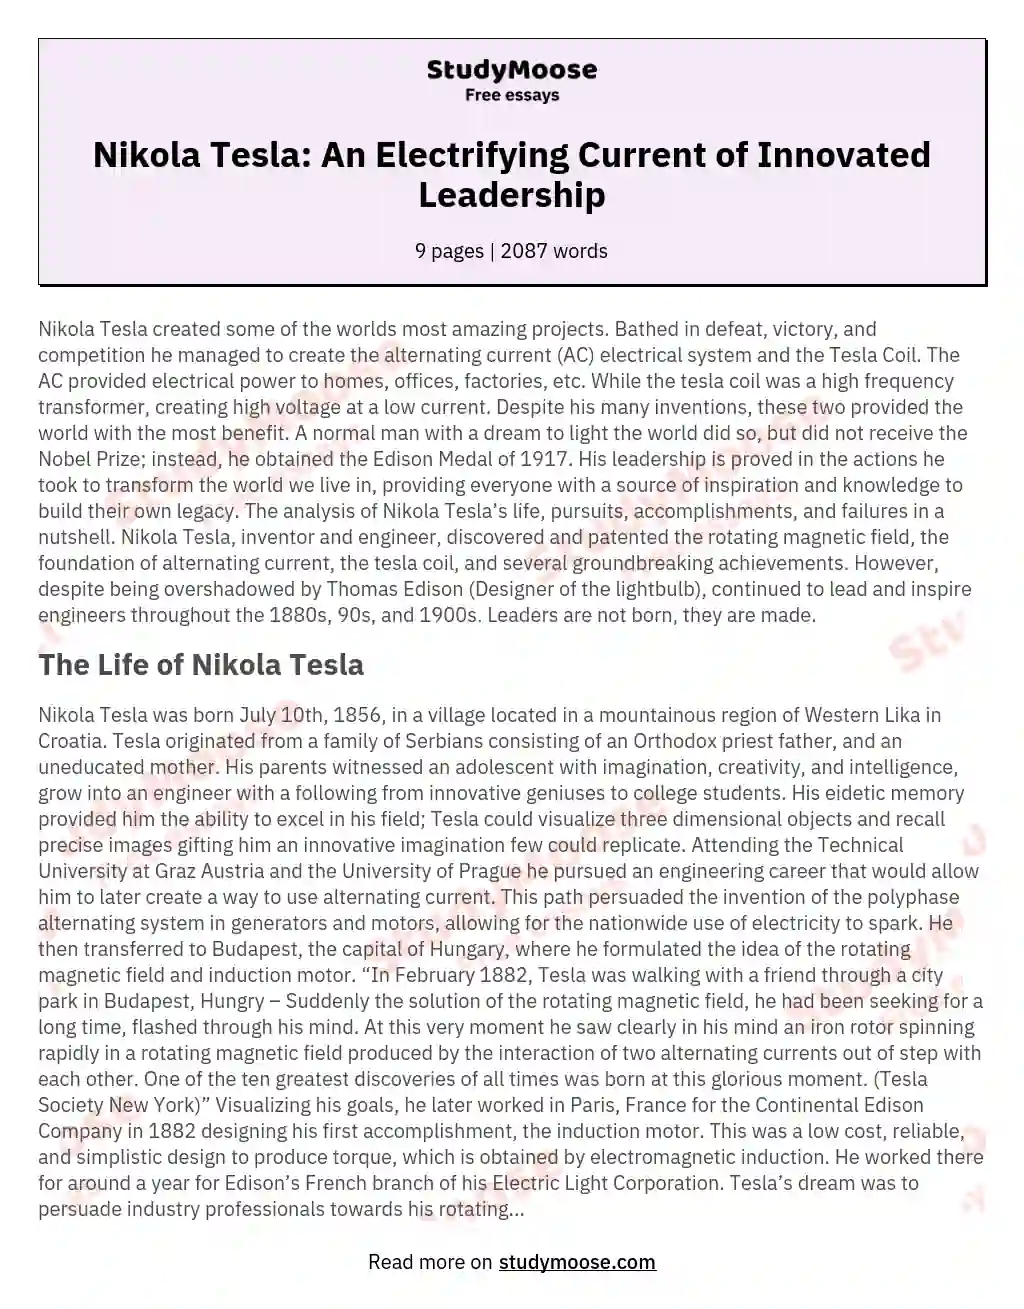 Nikola Tesla:  An Electrifying Current of Innovated Leadership essay